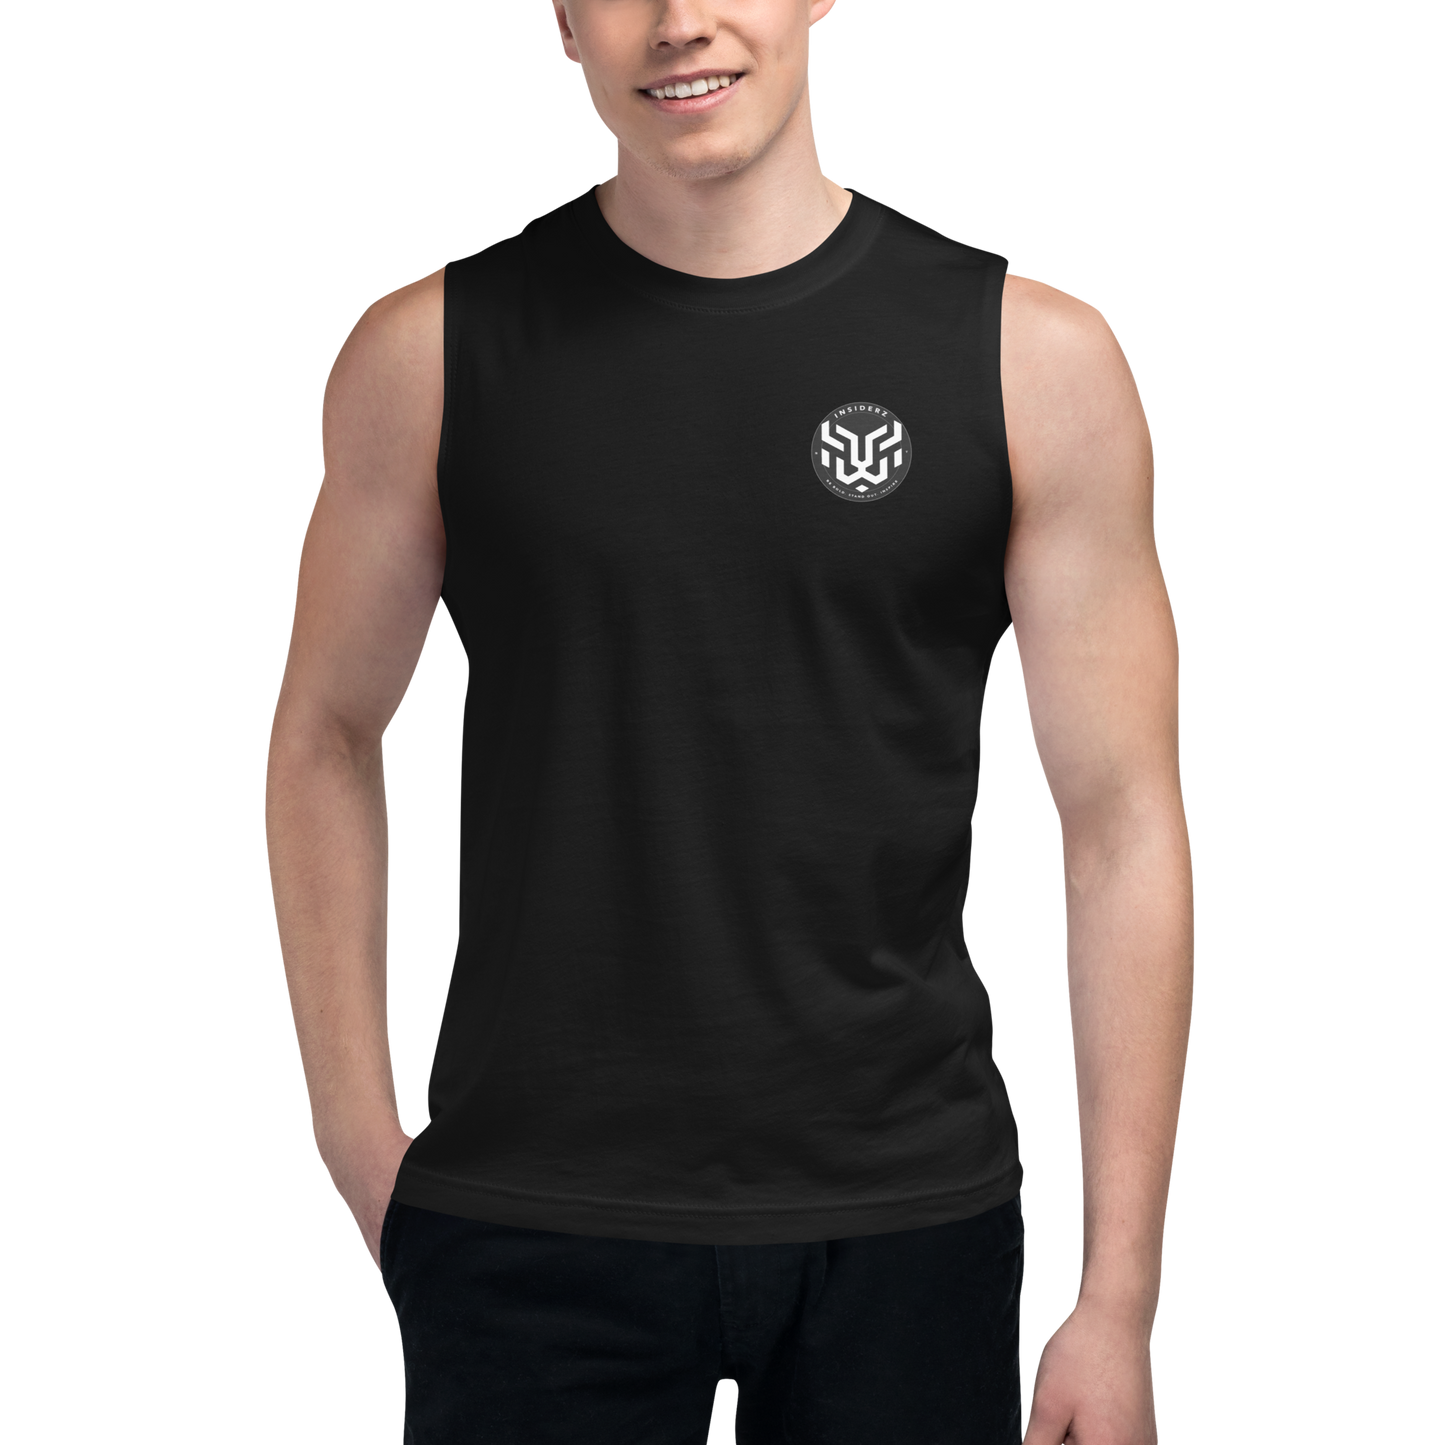 Leo Muscle Shirt